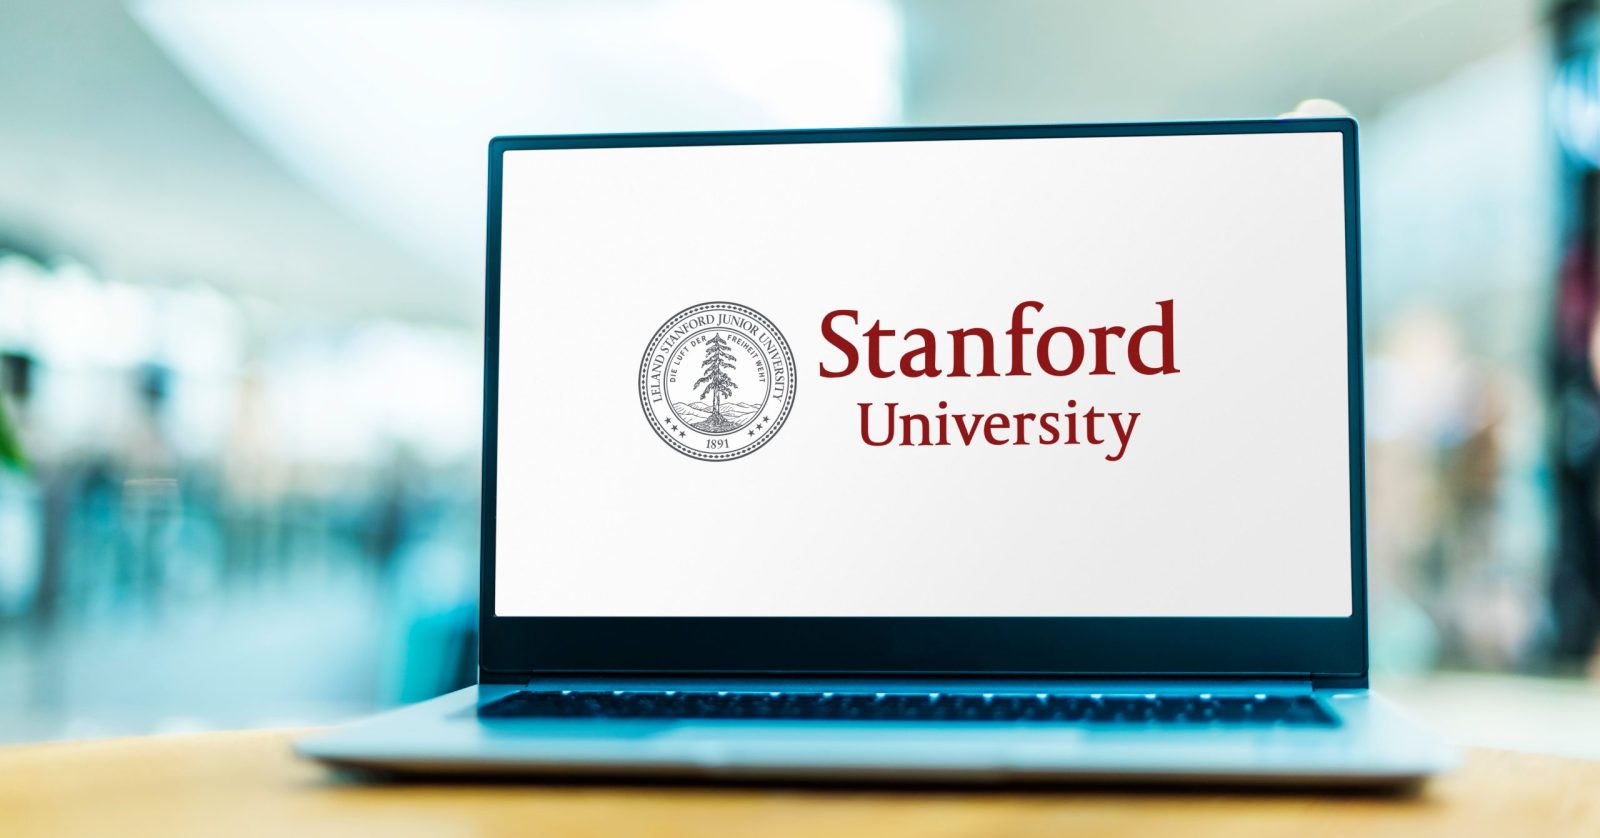 Stanford University logo on computer screen